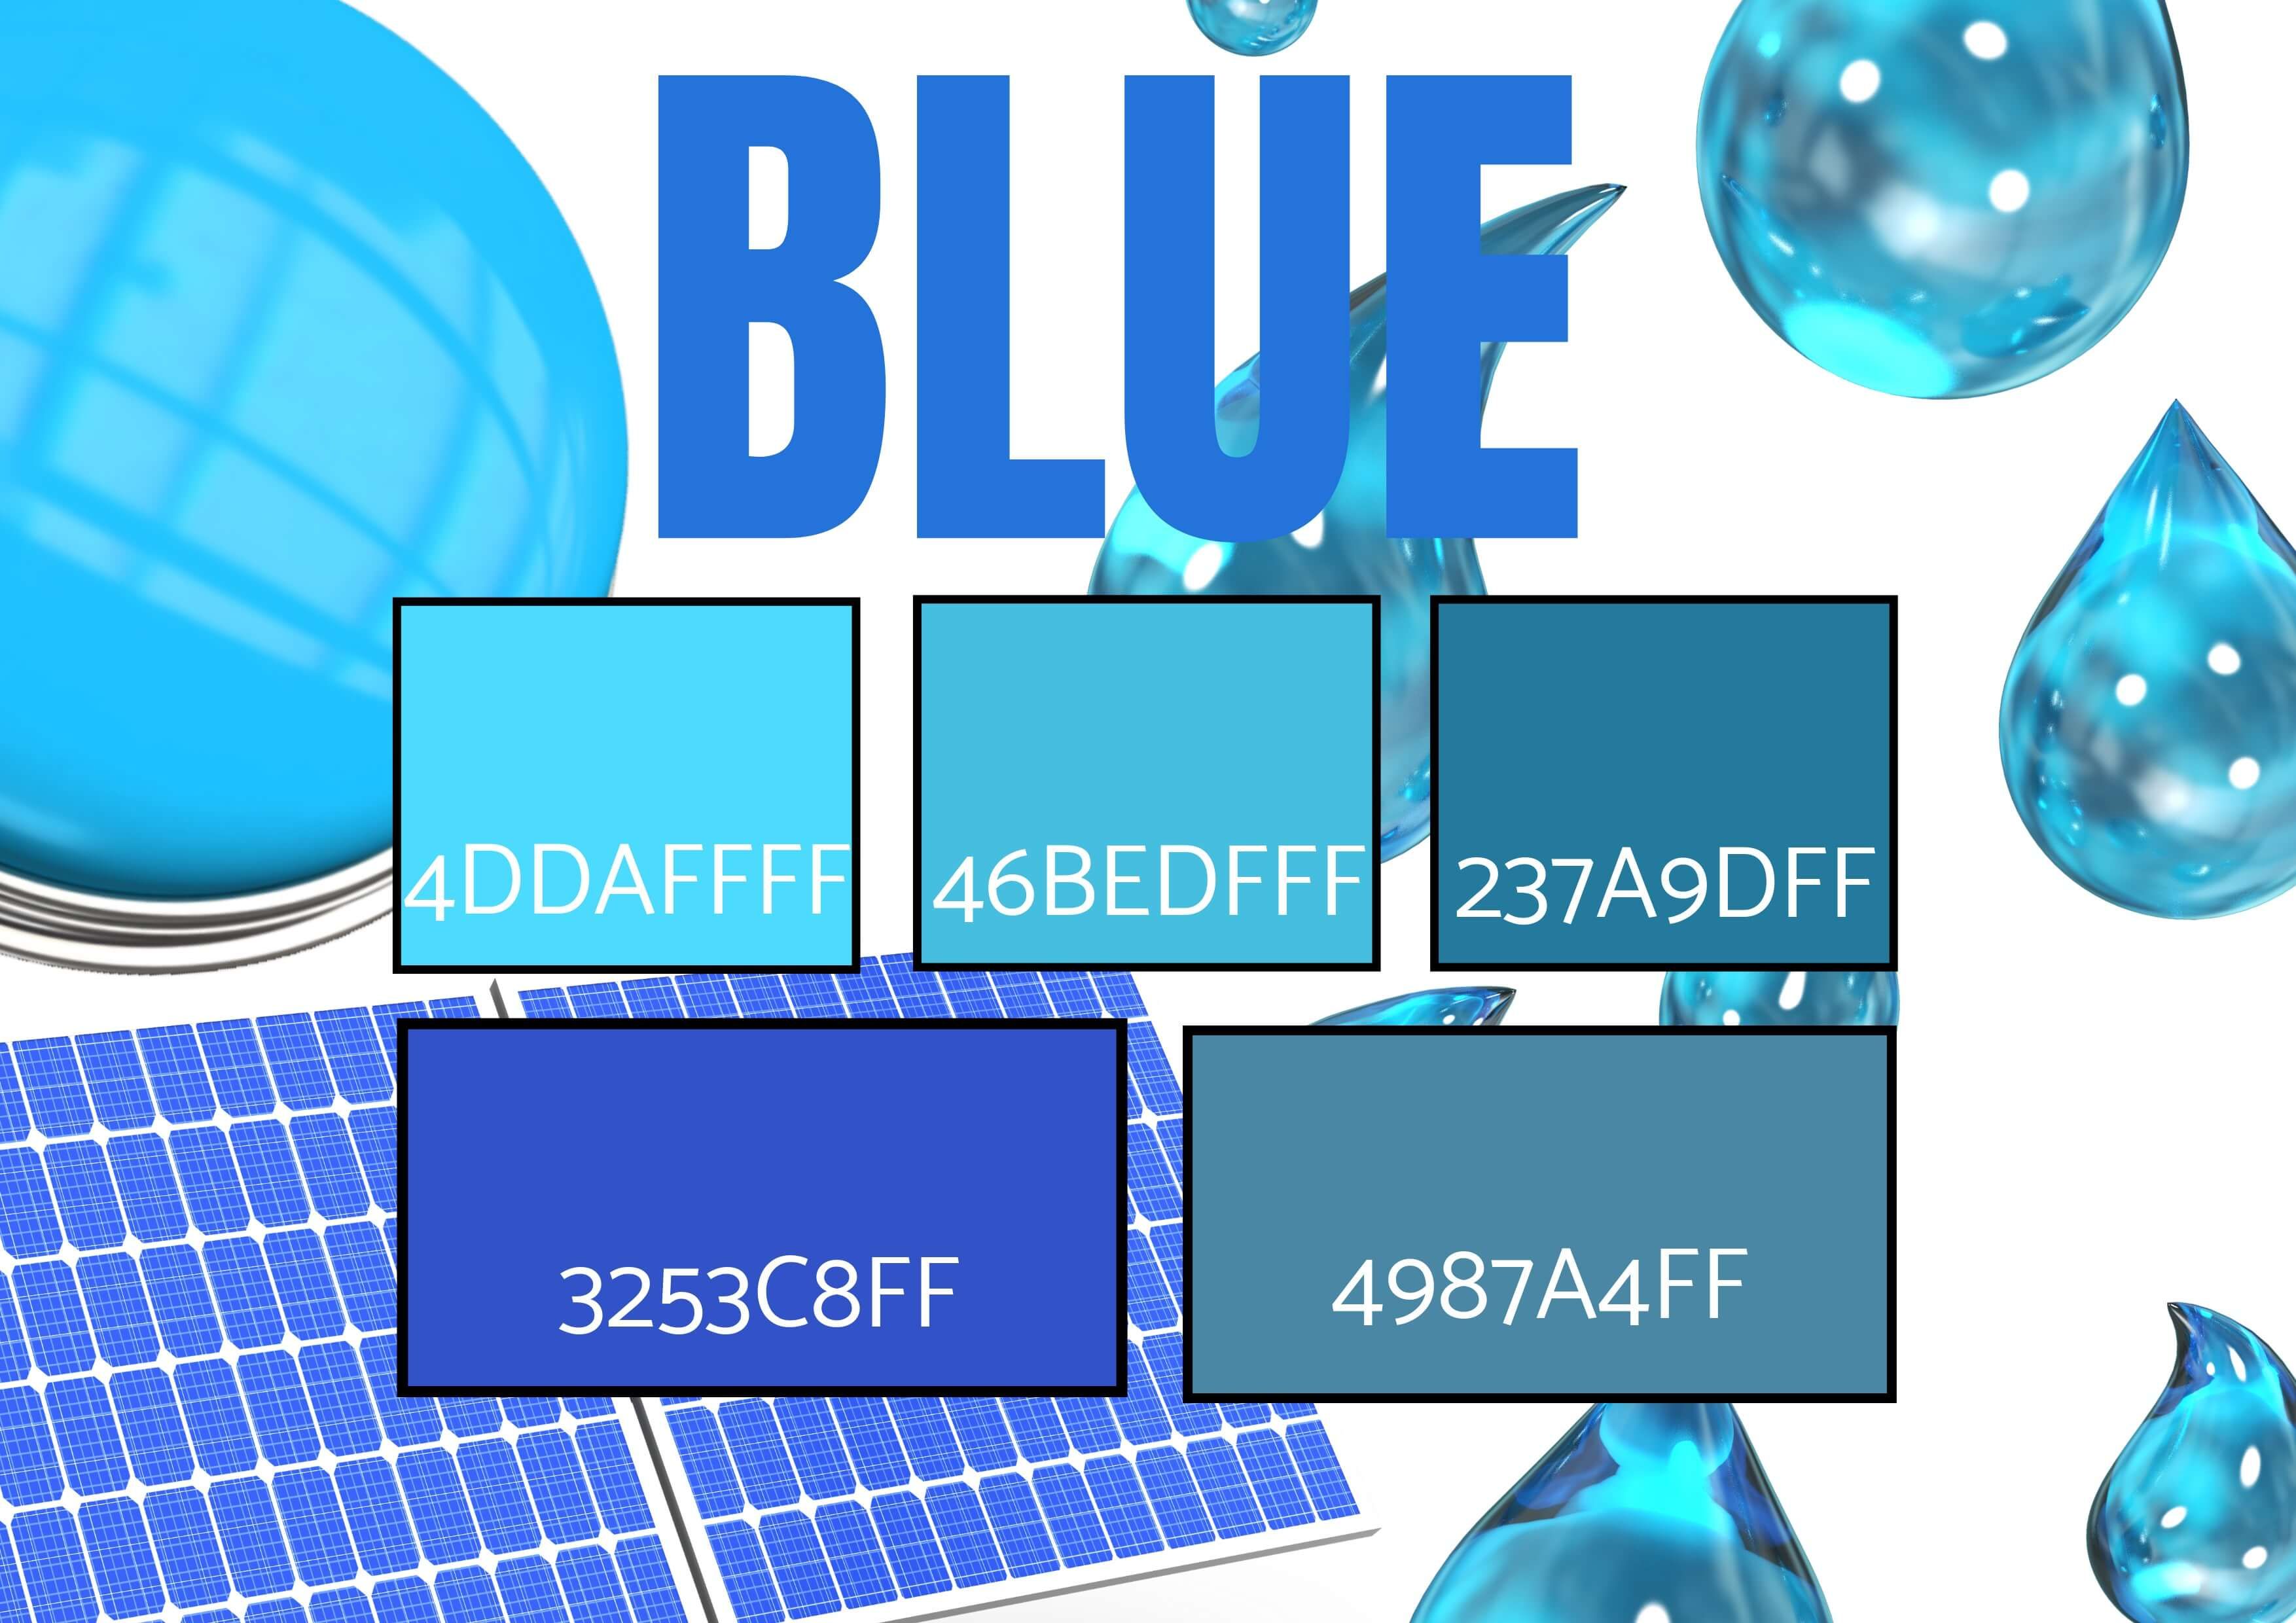 Selección de 5 Tonos Azules con imágenes de gotas de agua, botón y panel solar - simbolismo